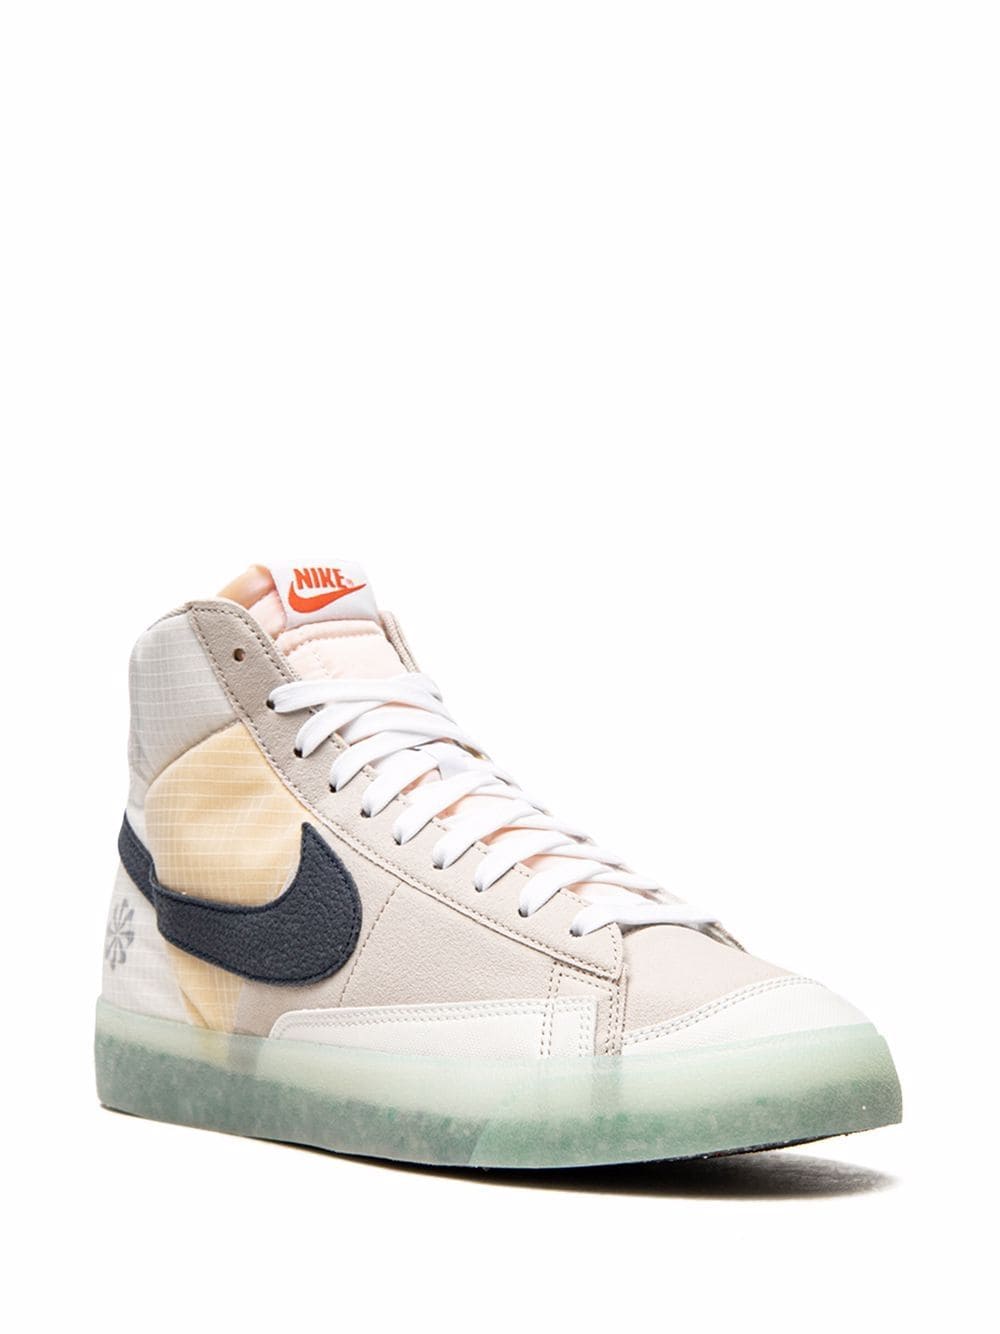 Image 2 of Nike "Blazer Mid '77 ""Glaciar Ice"" sneakers"